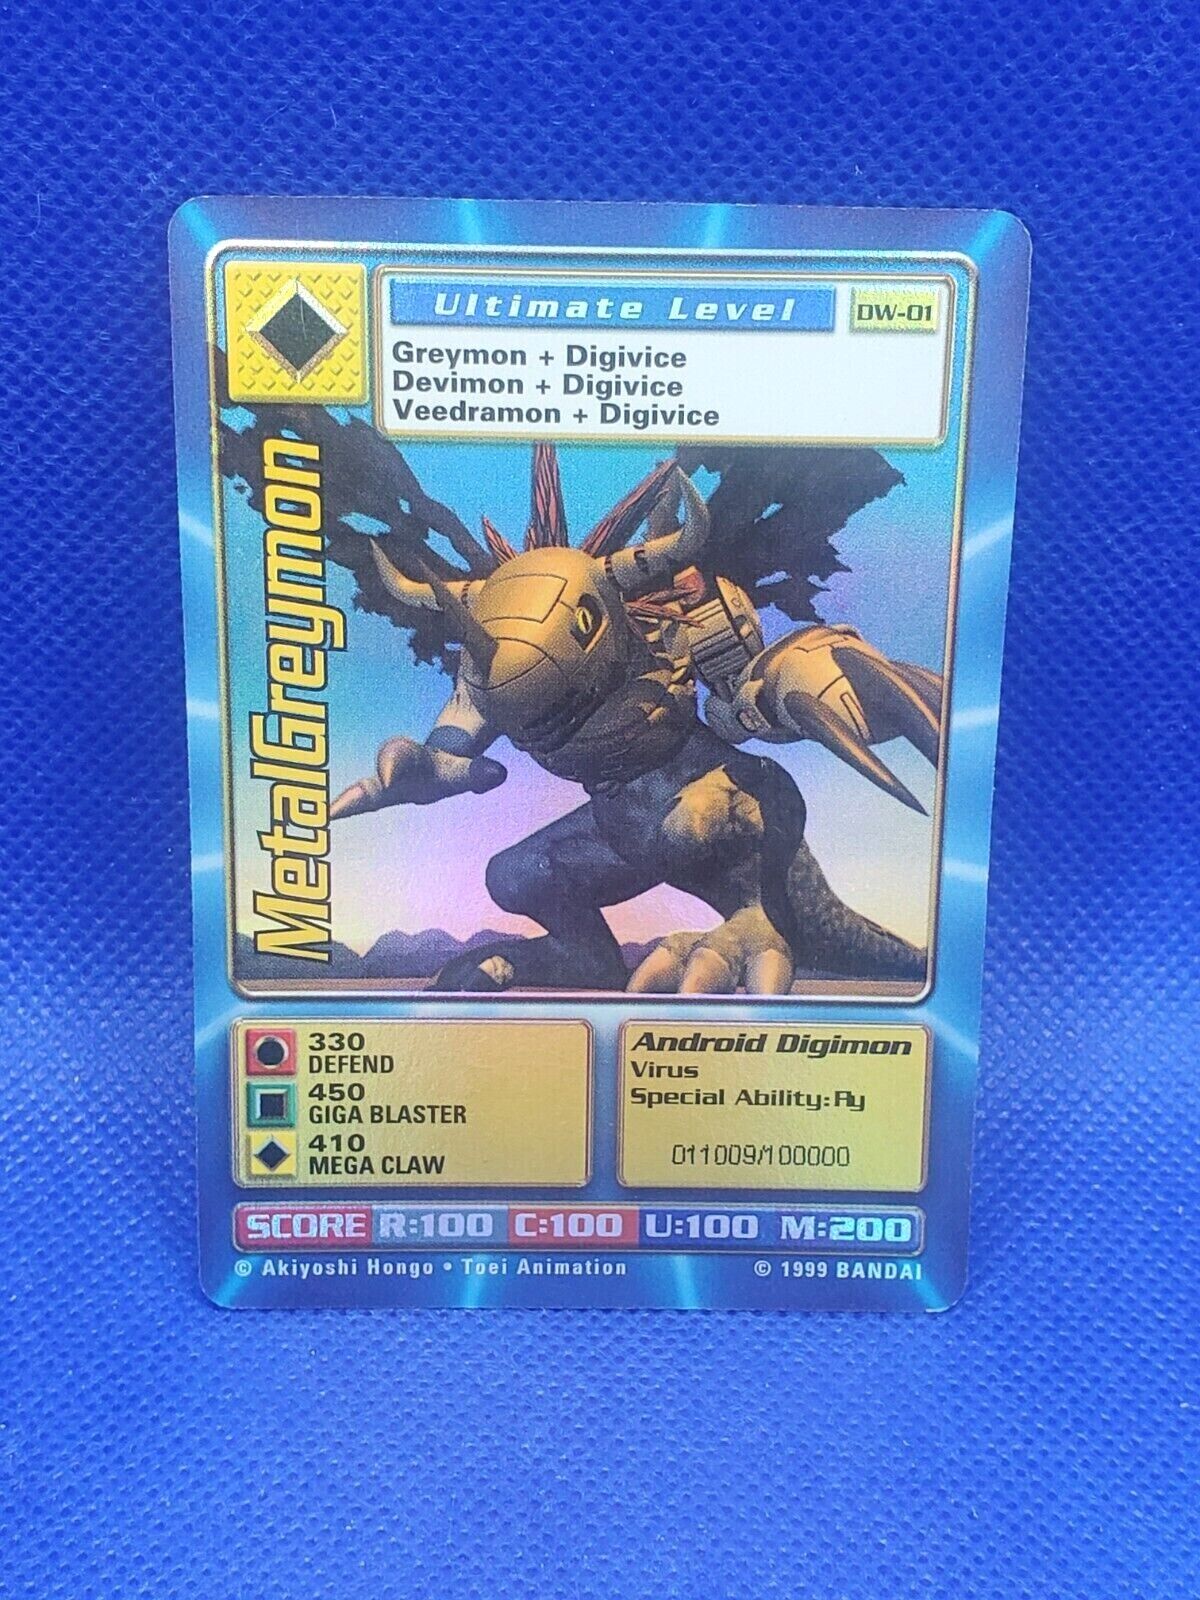 Digimon World PlayStation Promo DW-01 MetalGreymon - number 011009 / 100,000